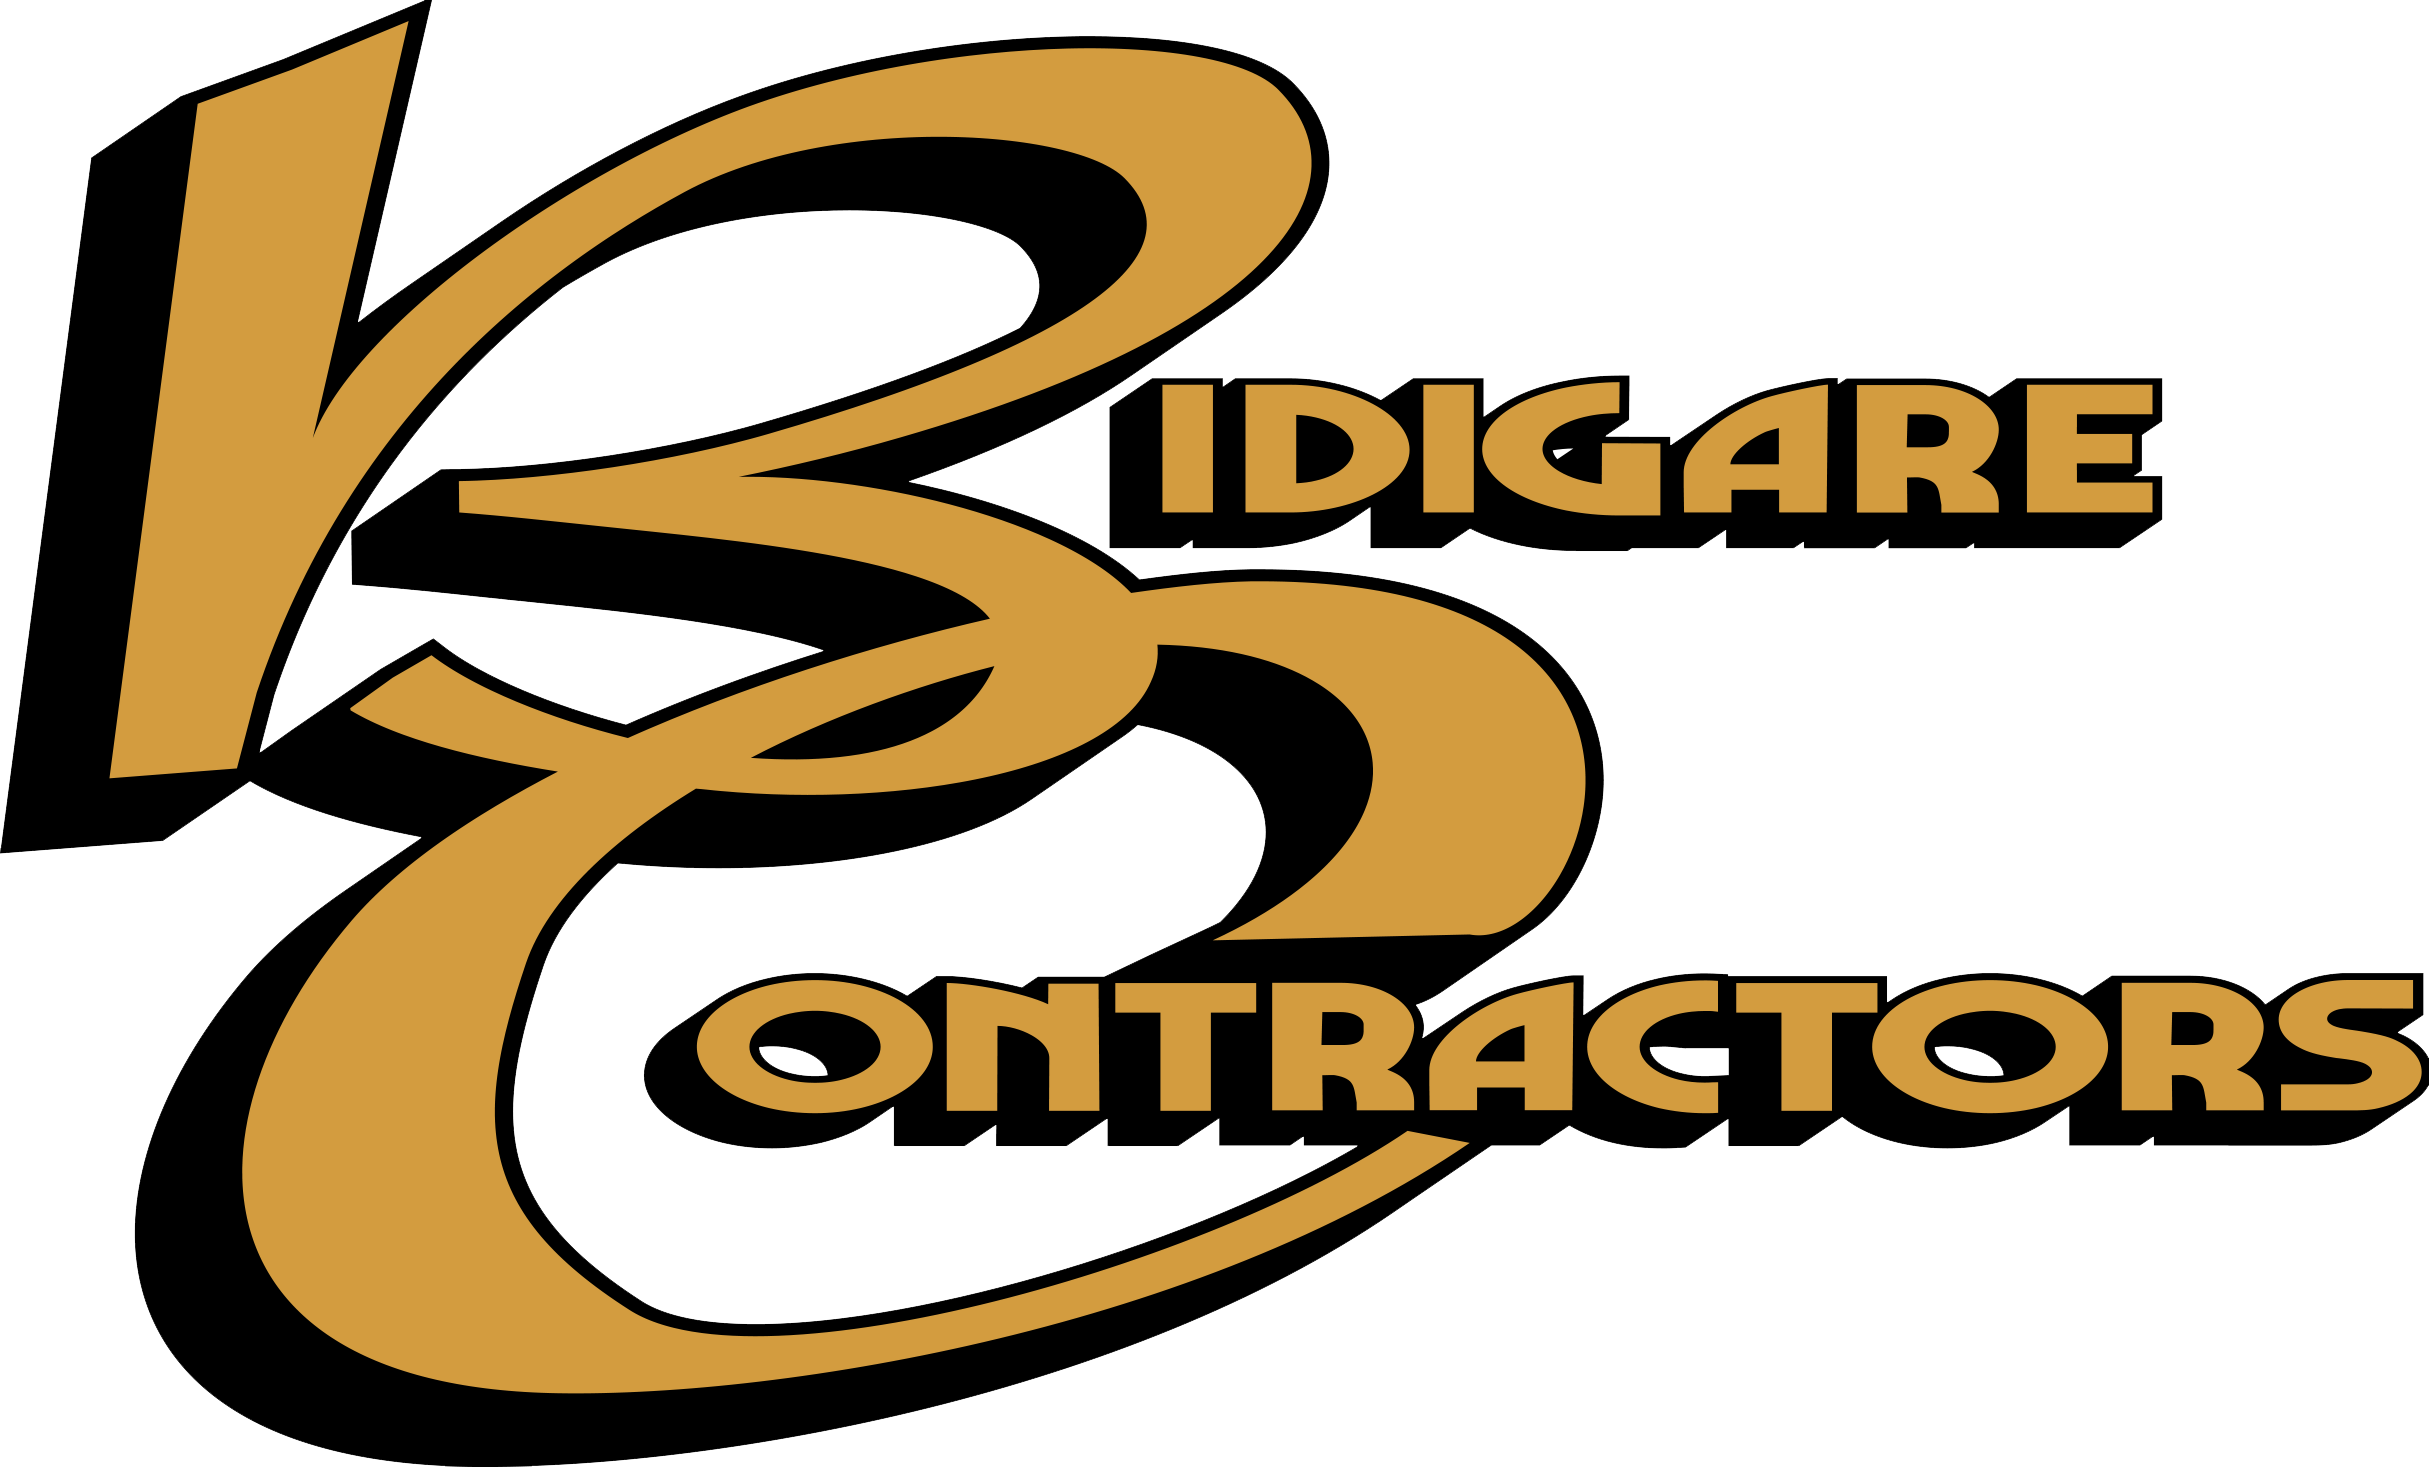 Bidigare-logo-w-name-transparent